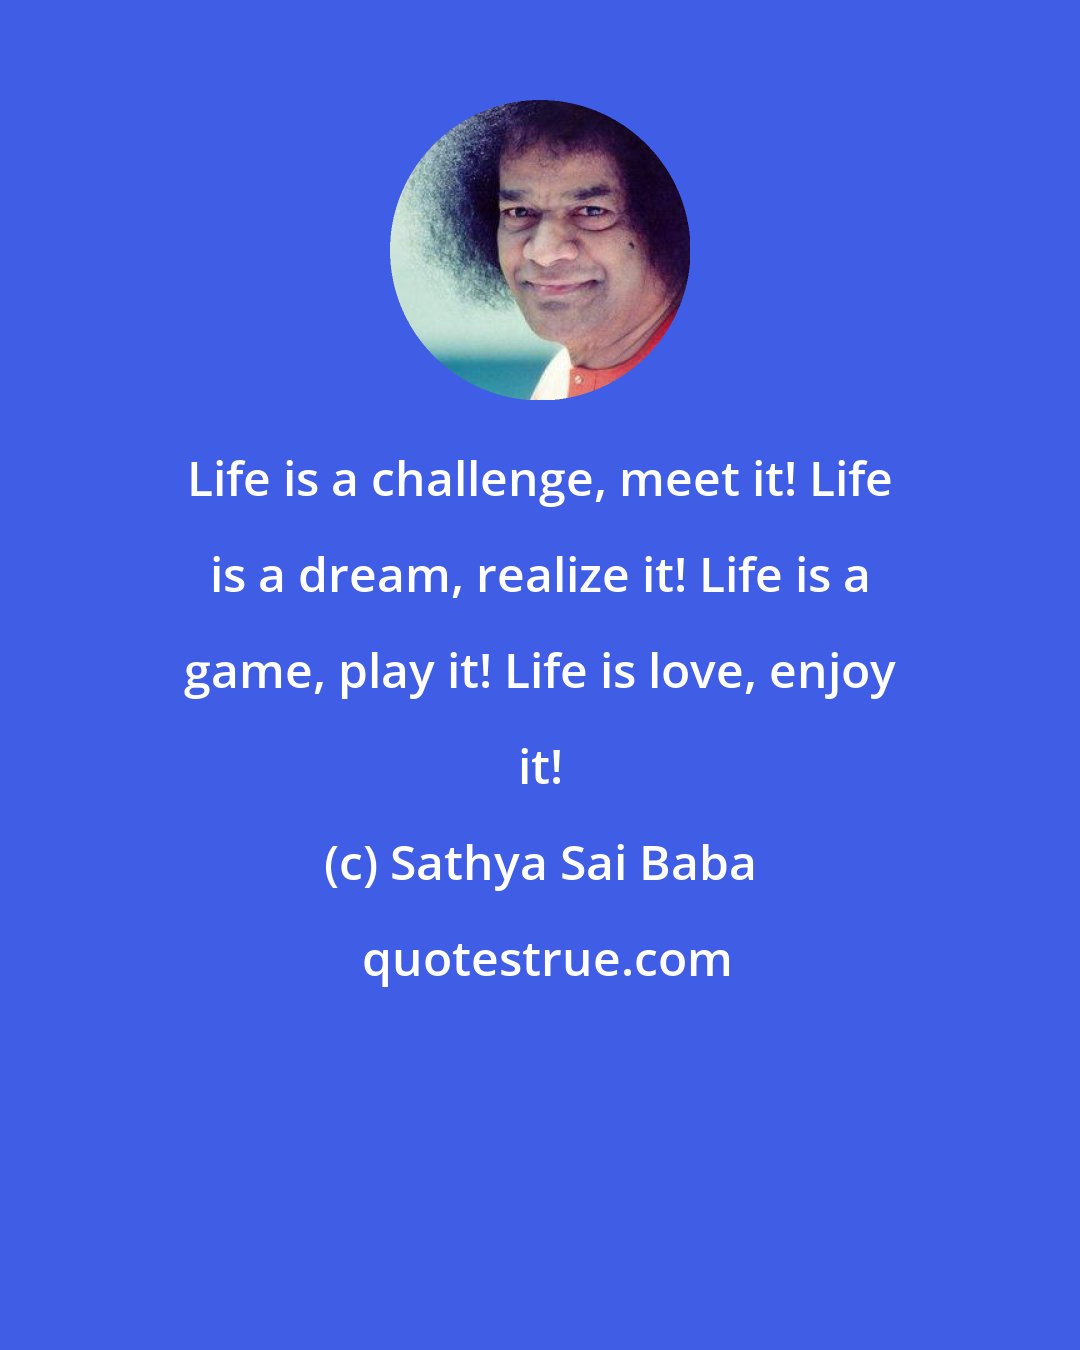 Sathya Sai Baba: Life is a challenge, meet it! Life is a dream, realize it! Life is a game, play it! Life is love, enjoy it!